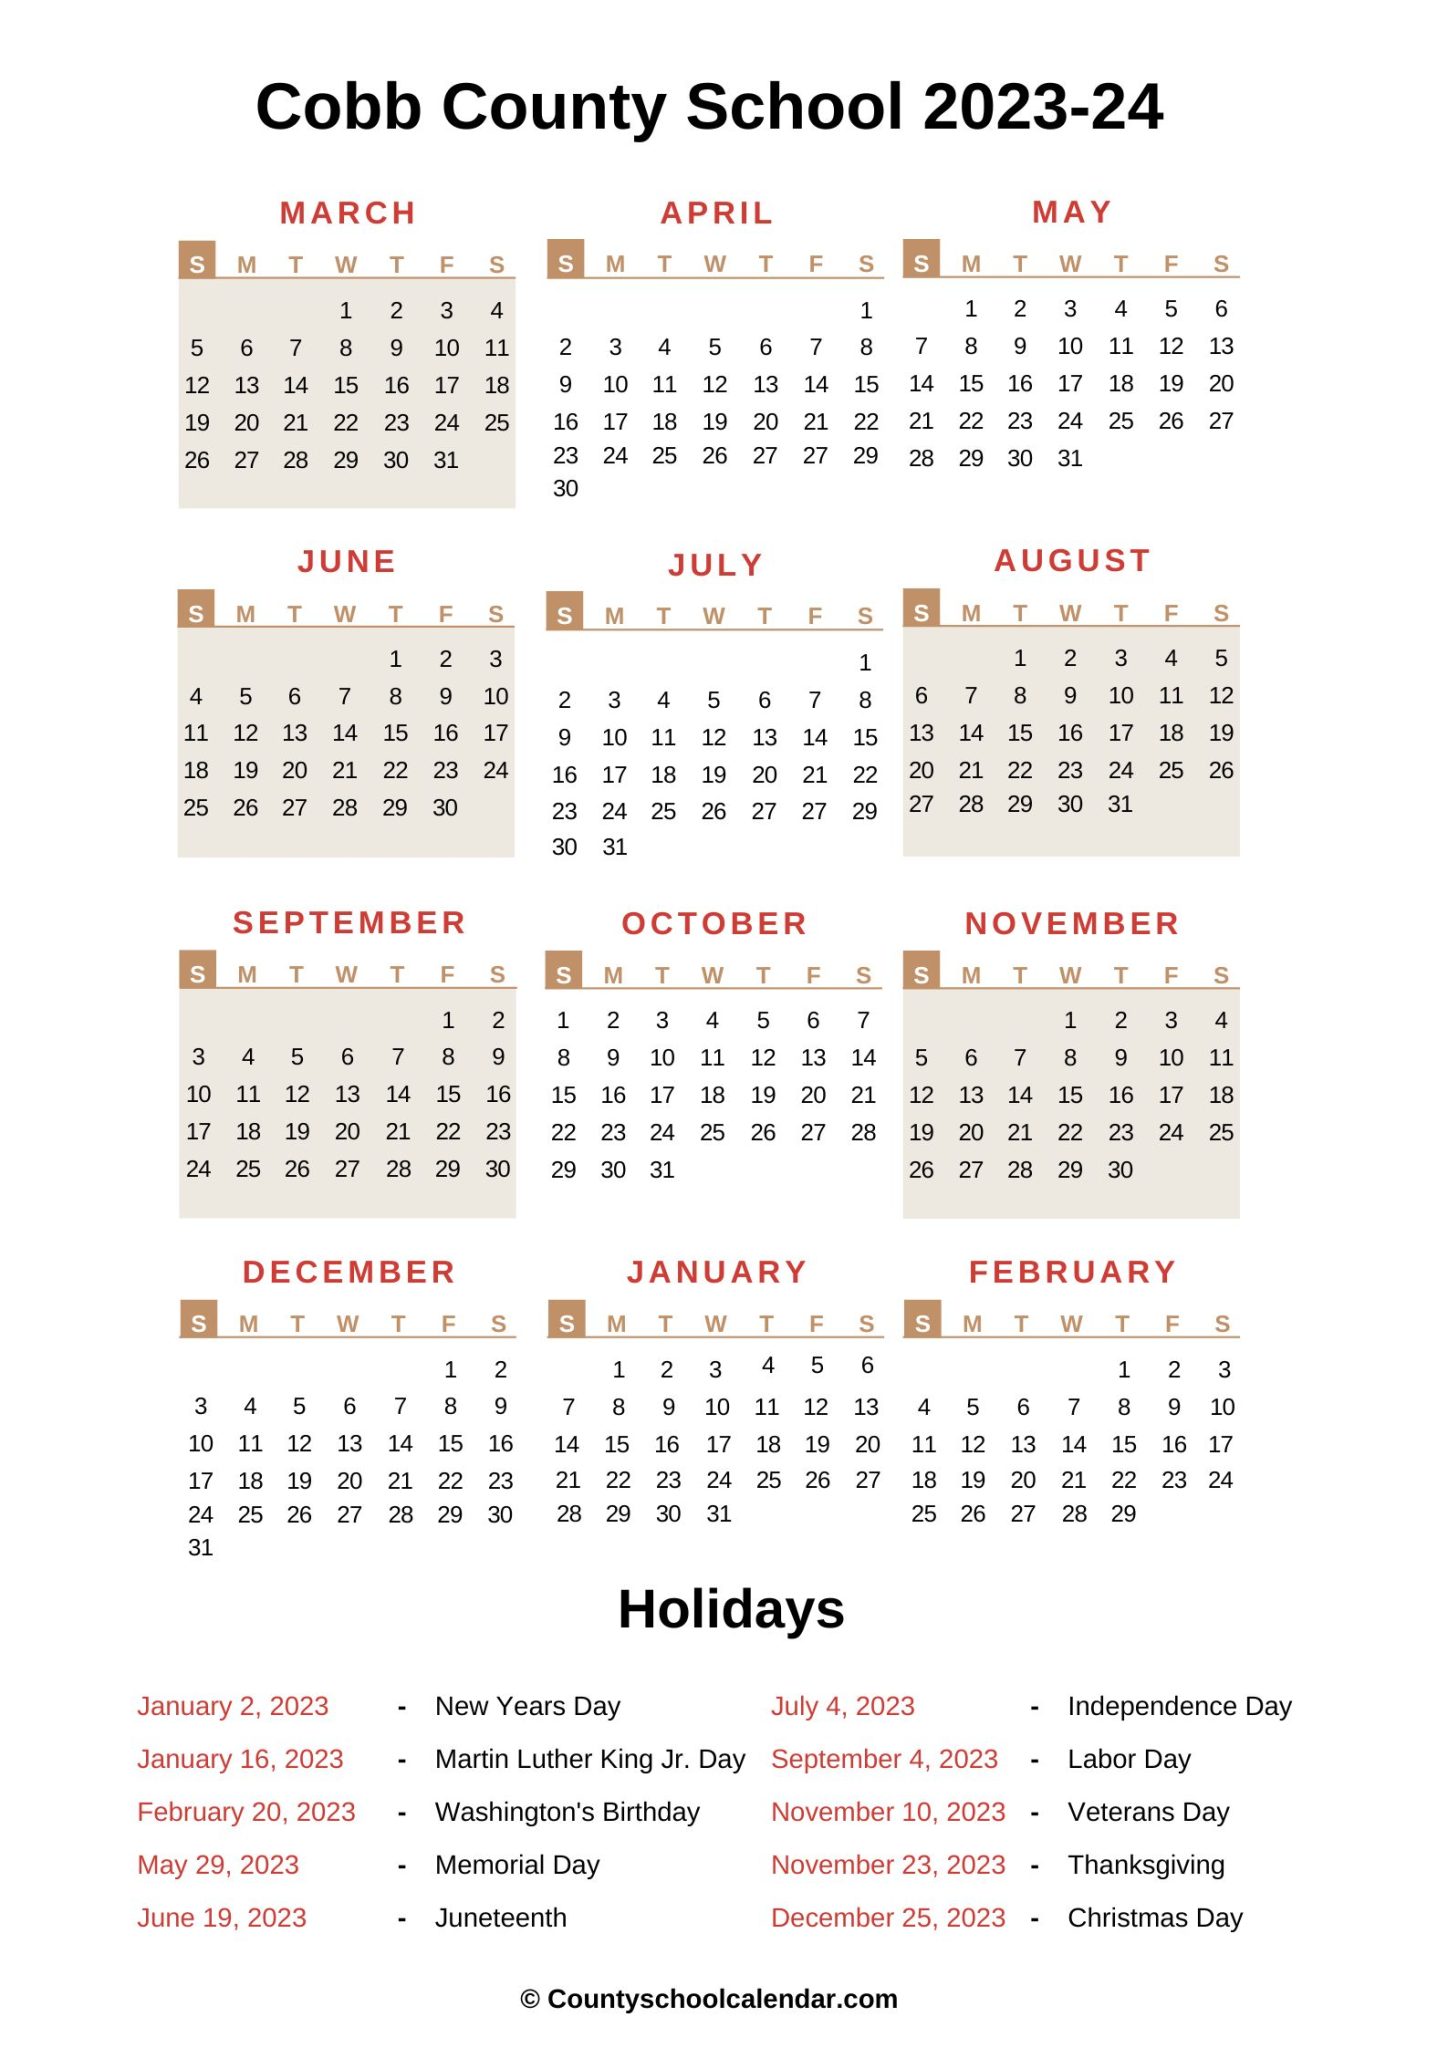 cobb-county-school-calendar-2022-23-with-holidays